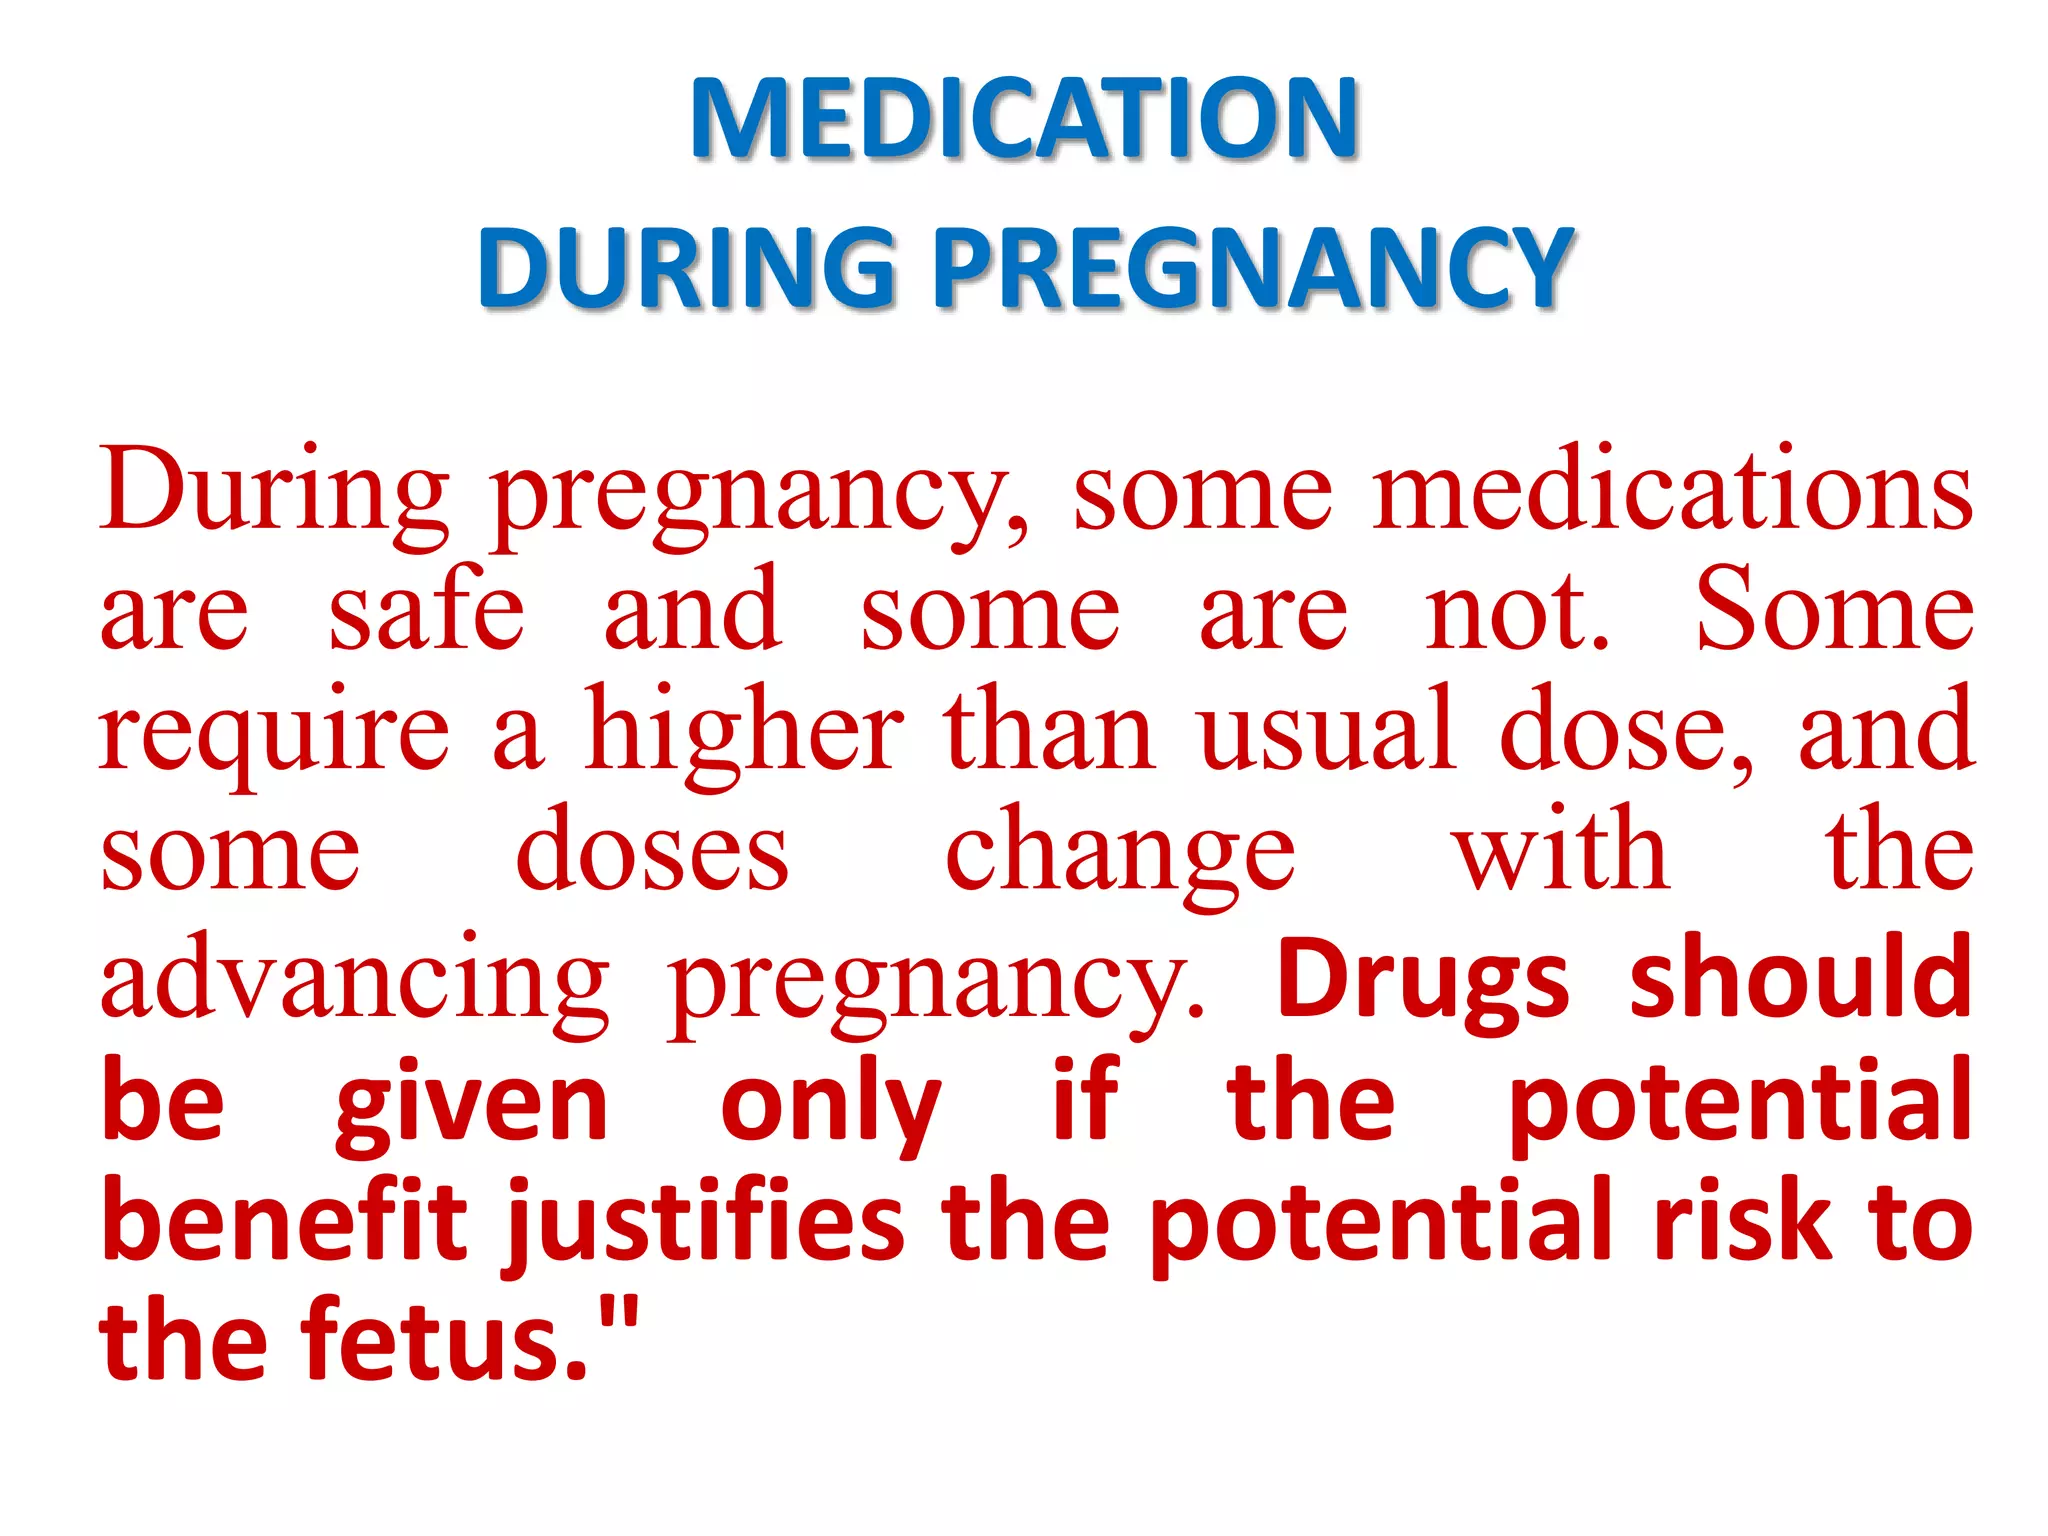 Medication during pregnancy